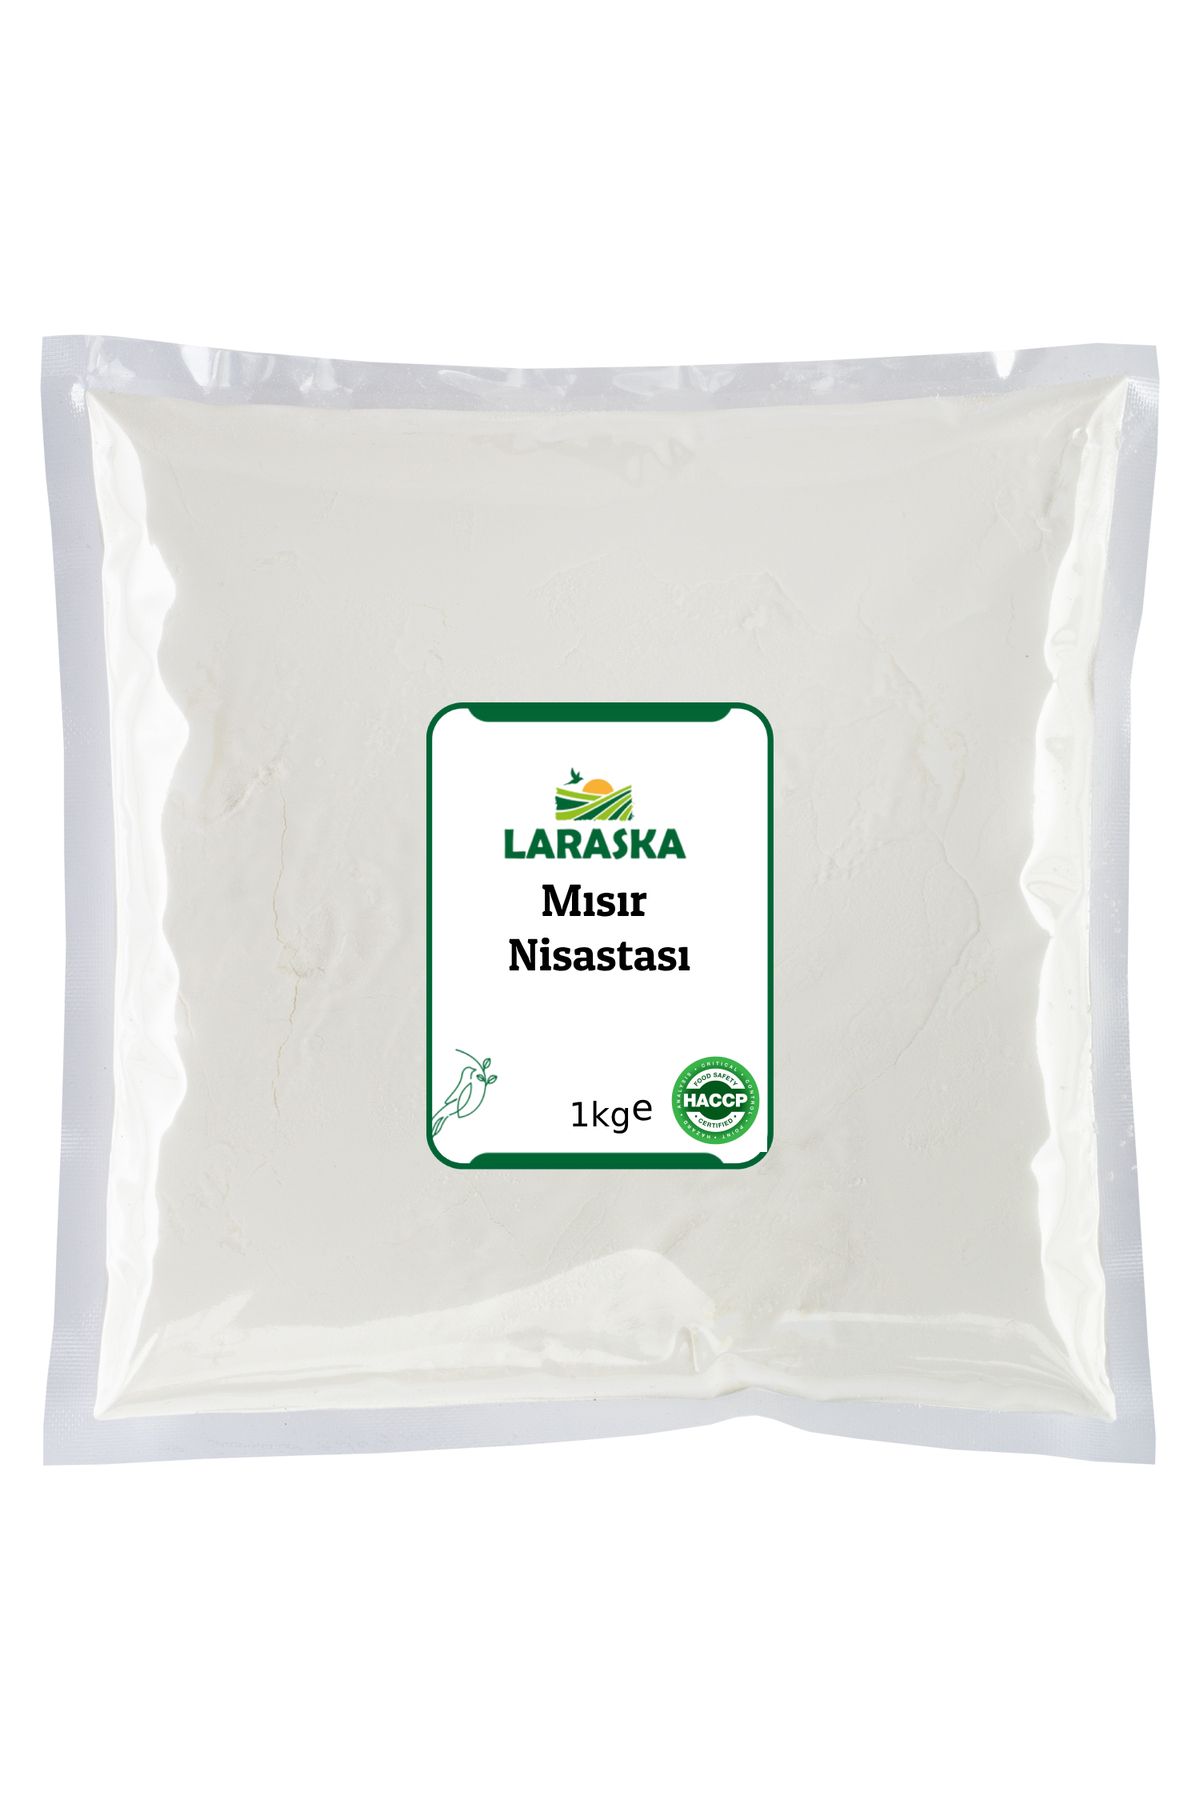 Laraska Mısır Nişastası 1kg - Corn Starch 1kg